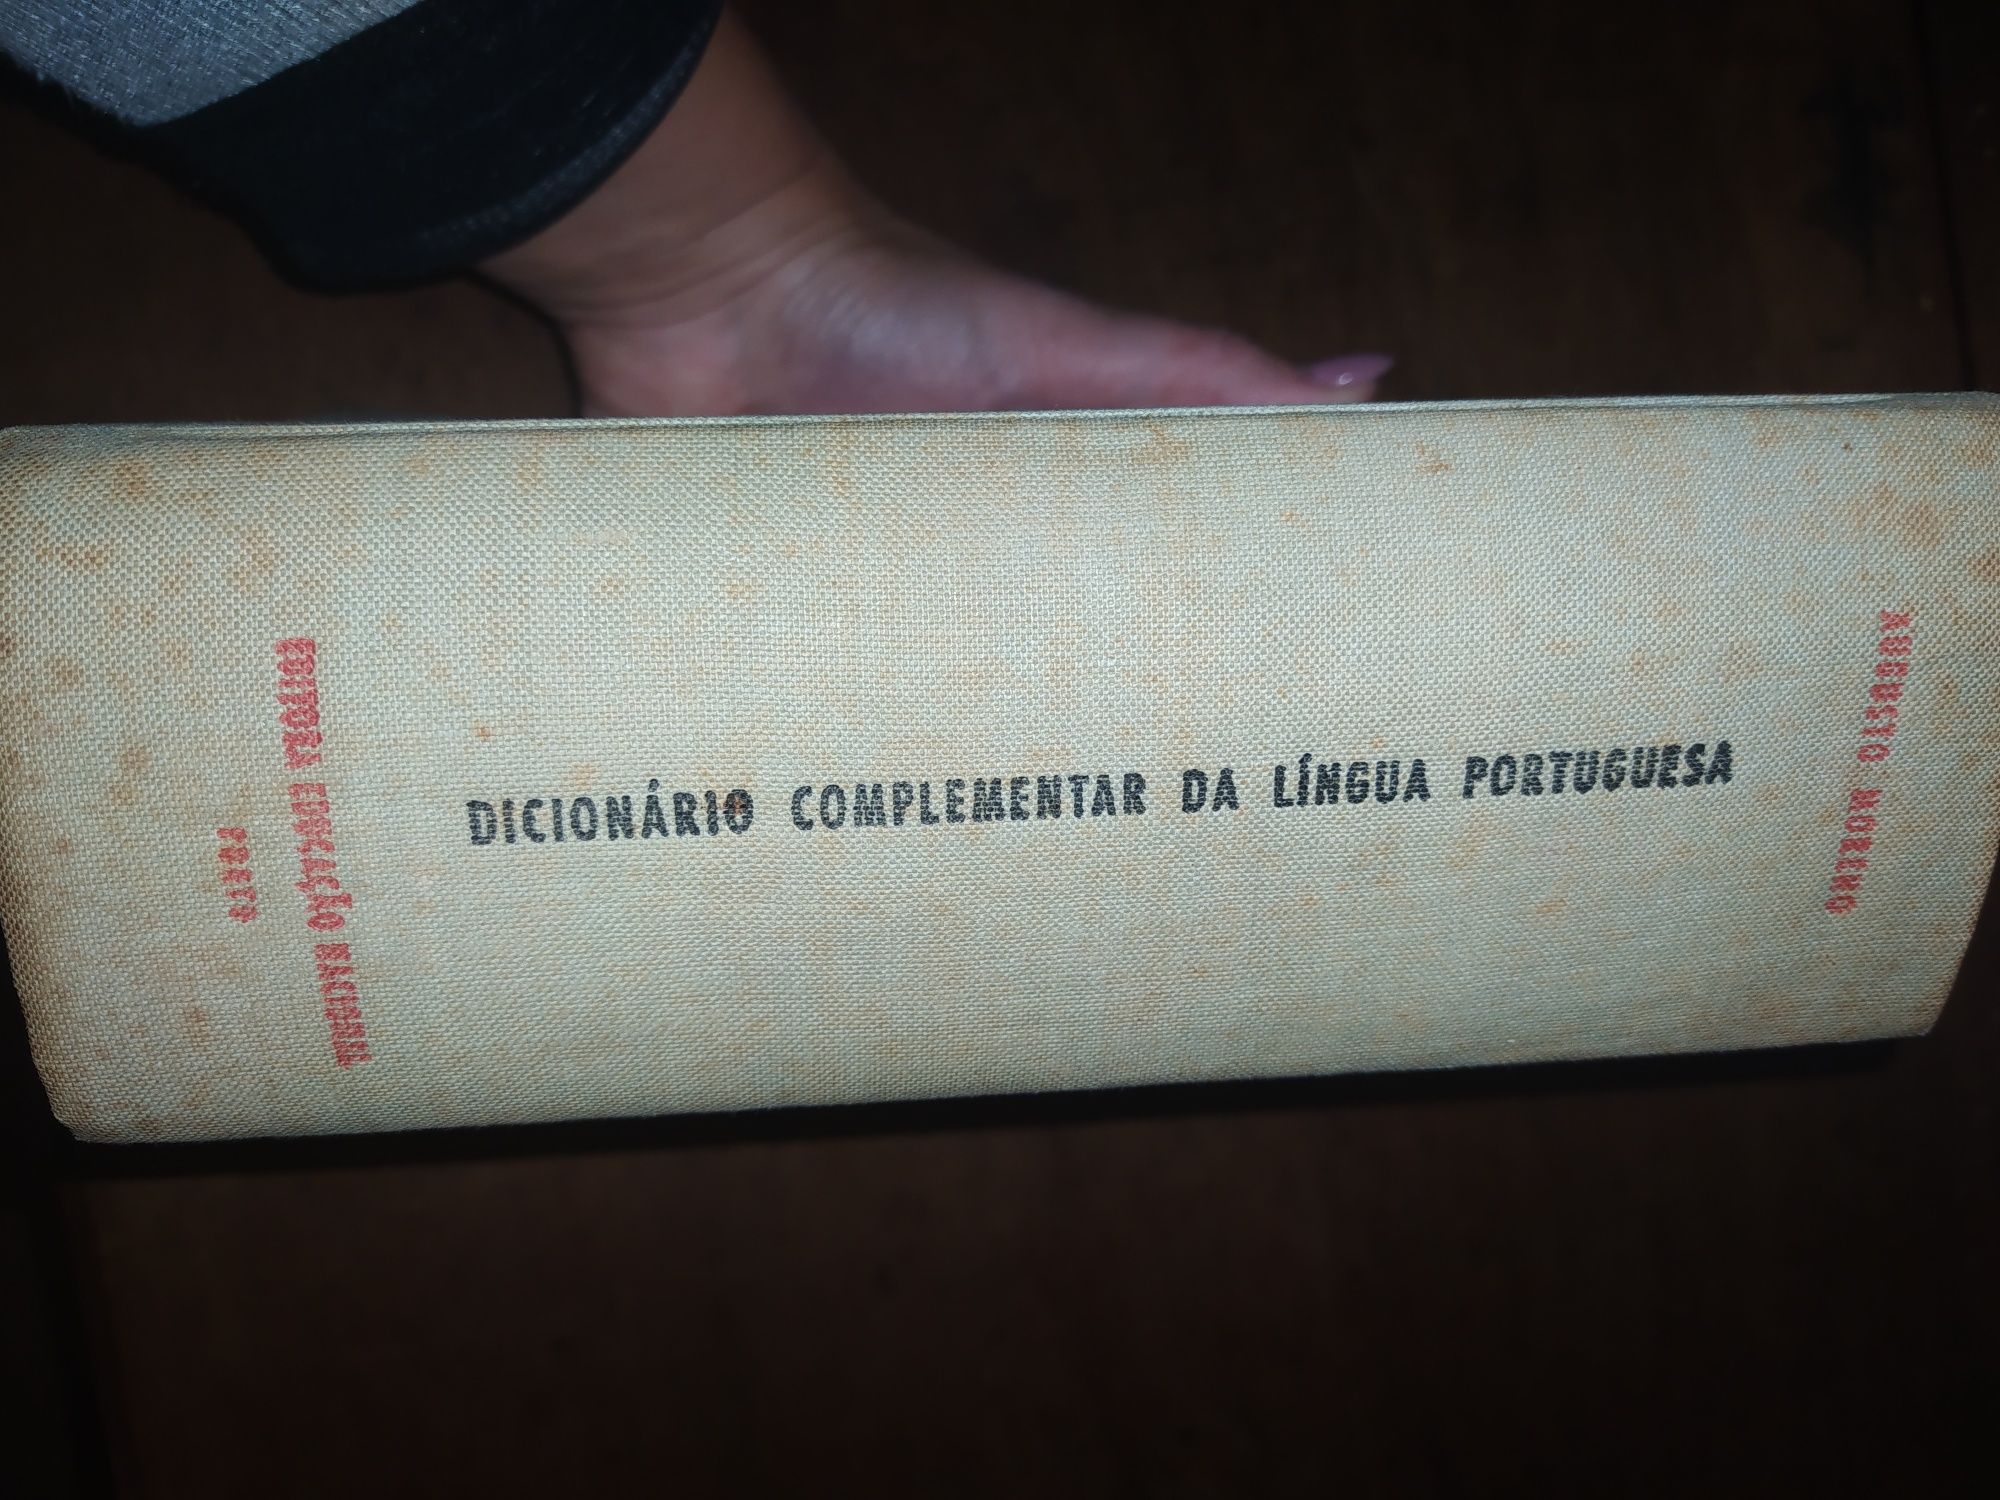 Dicionário complementar da língua portuguesa